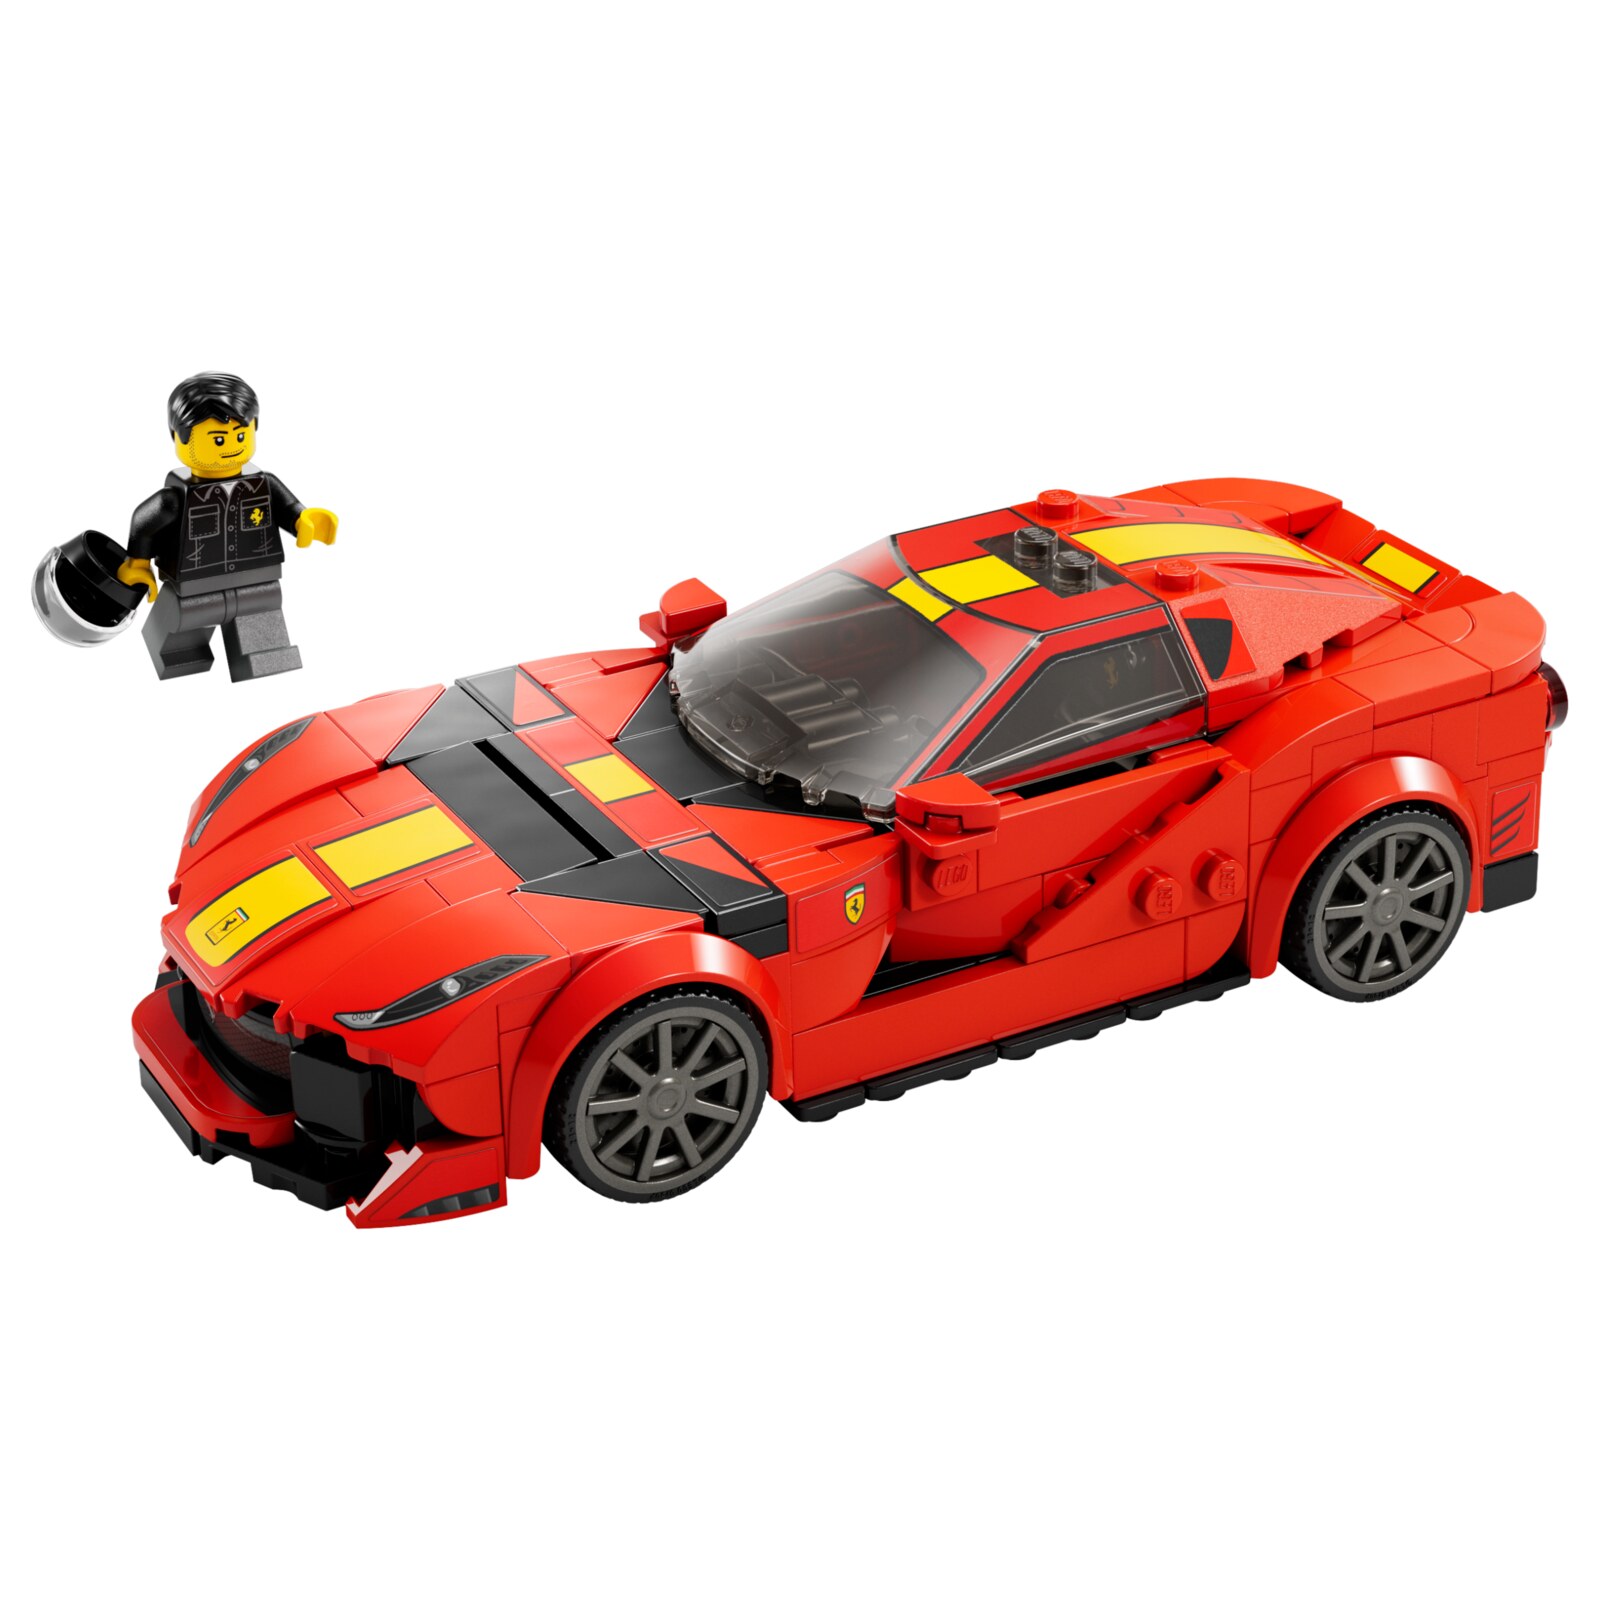 Конструктор LEGO Speed Champions Ferrari 812 Competizione, 261 деталь, 76914 конструктор lego speed champions 76907 lotus evija